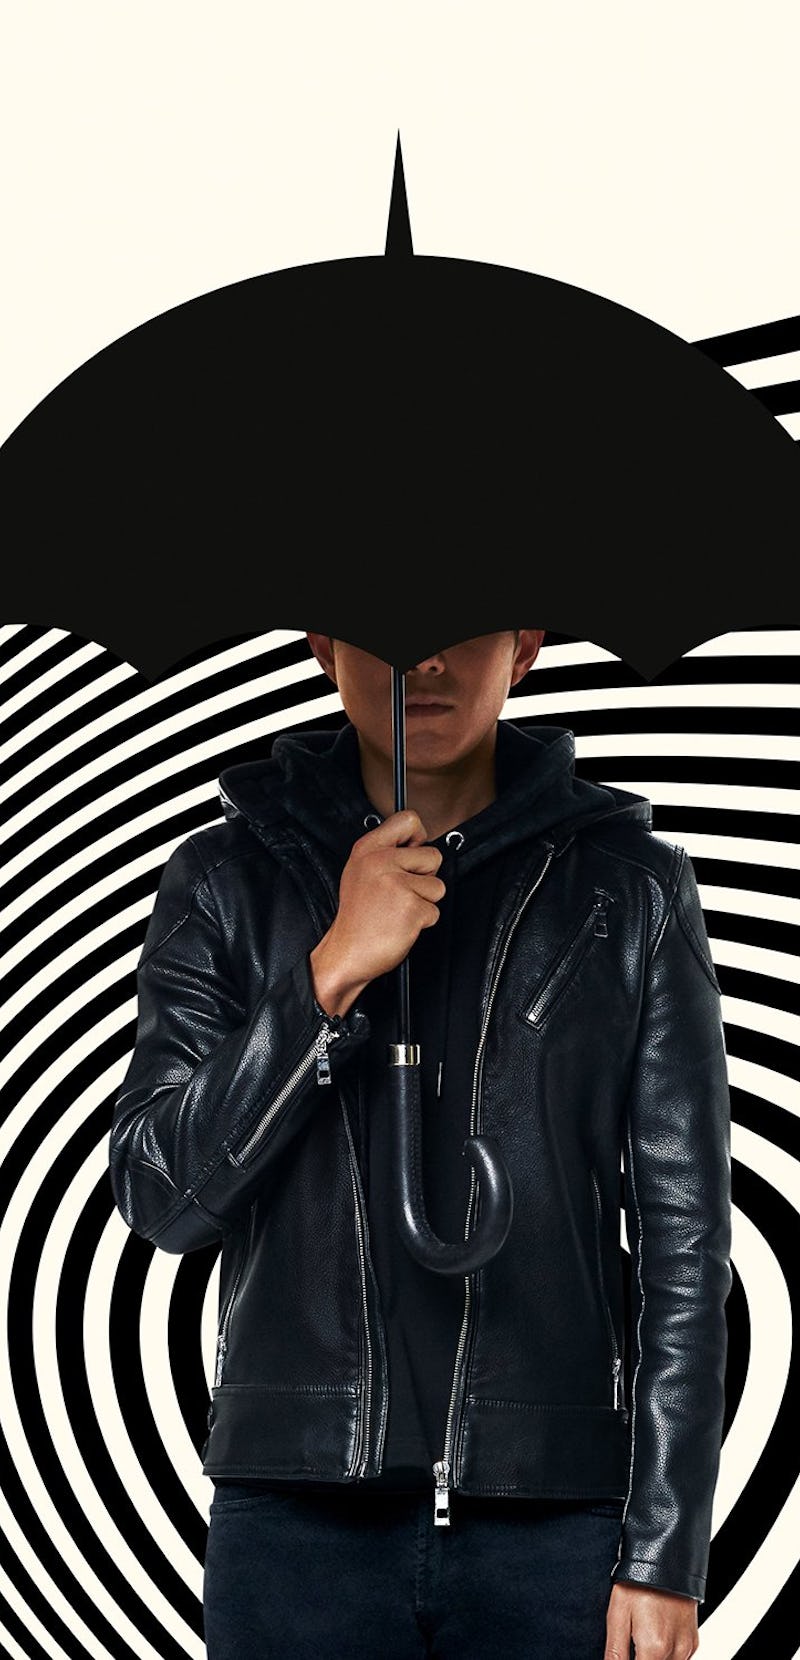 Ben Hargreeves posing with a black umbrella in Umbrella Academy Season 2